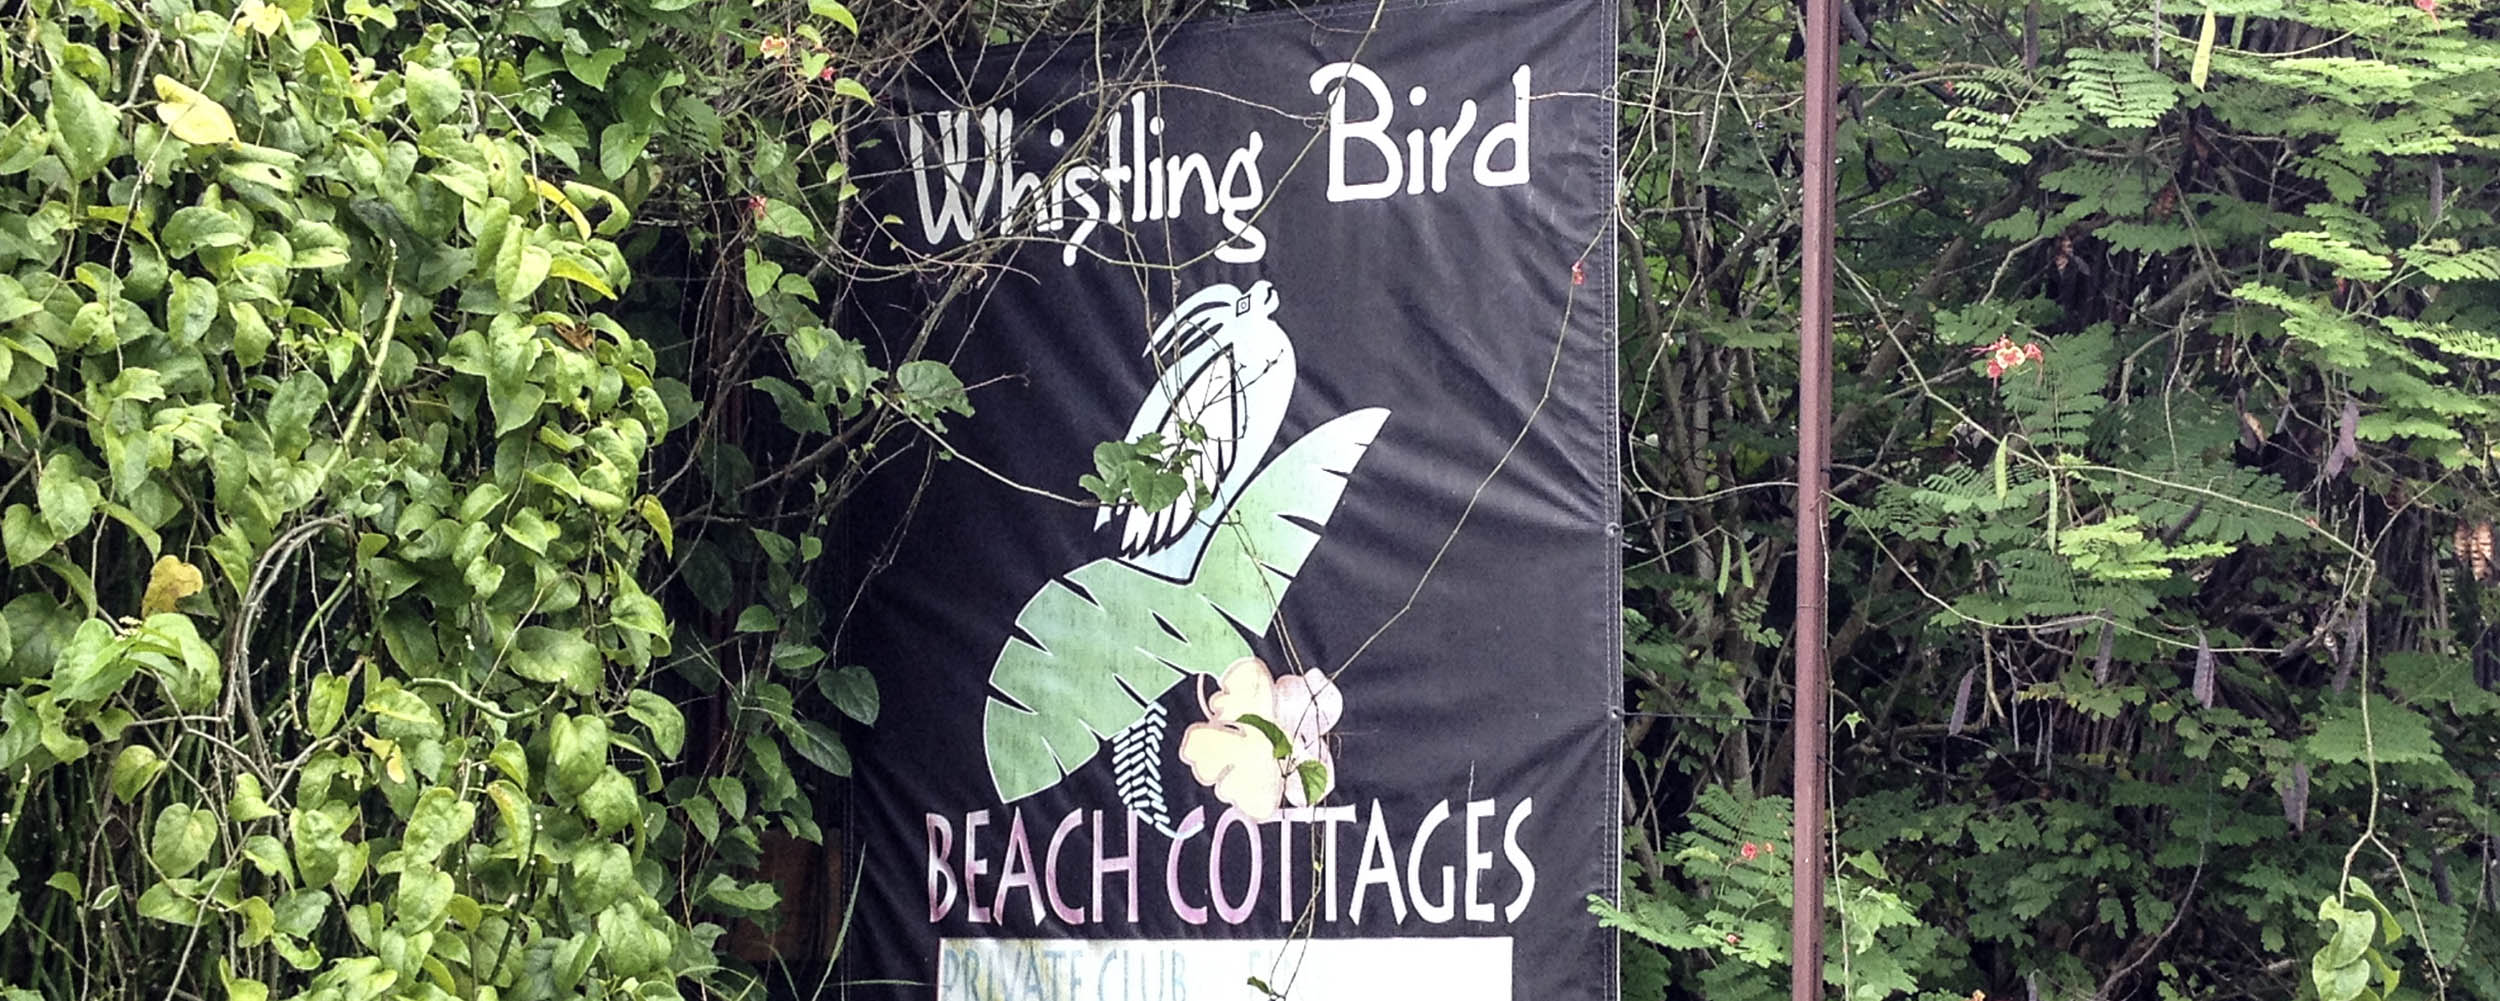 Whistling Bird Beach Cottages - Negril Jamaica